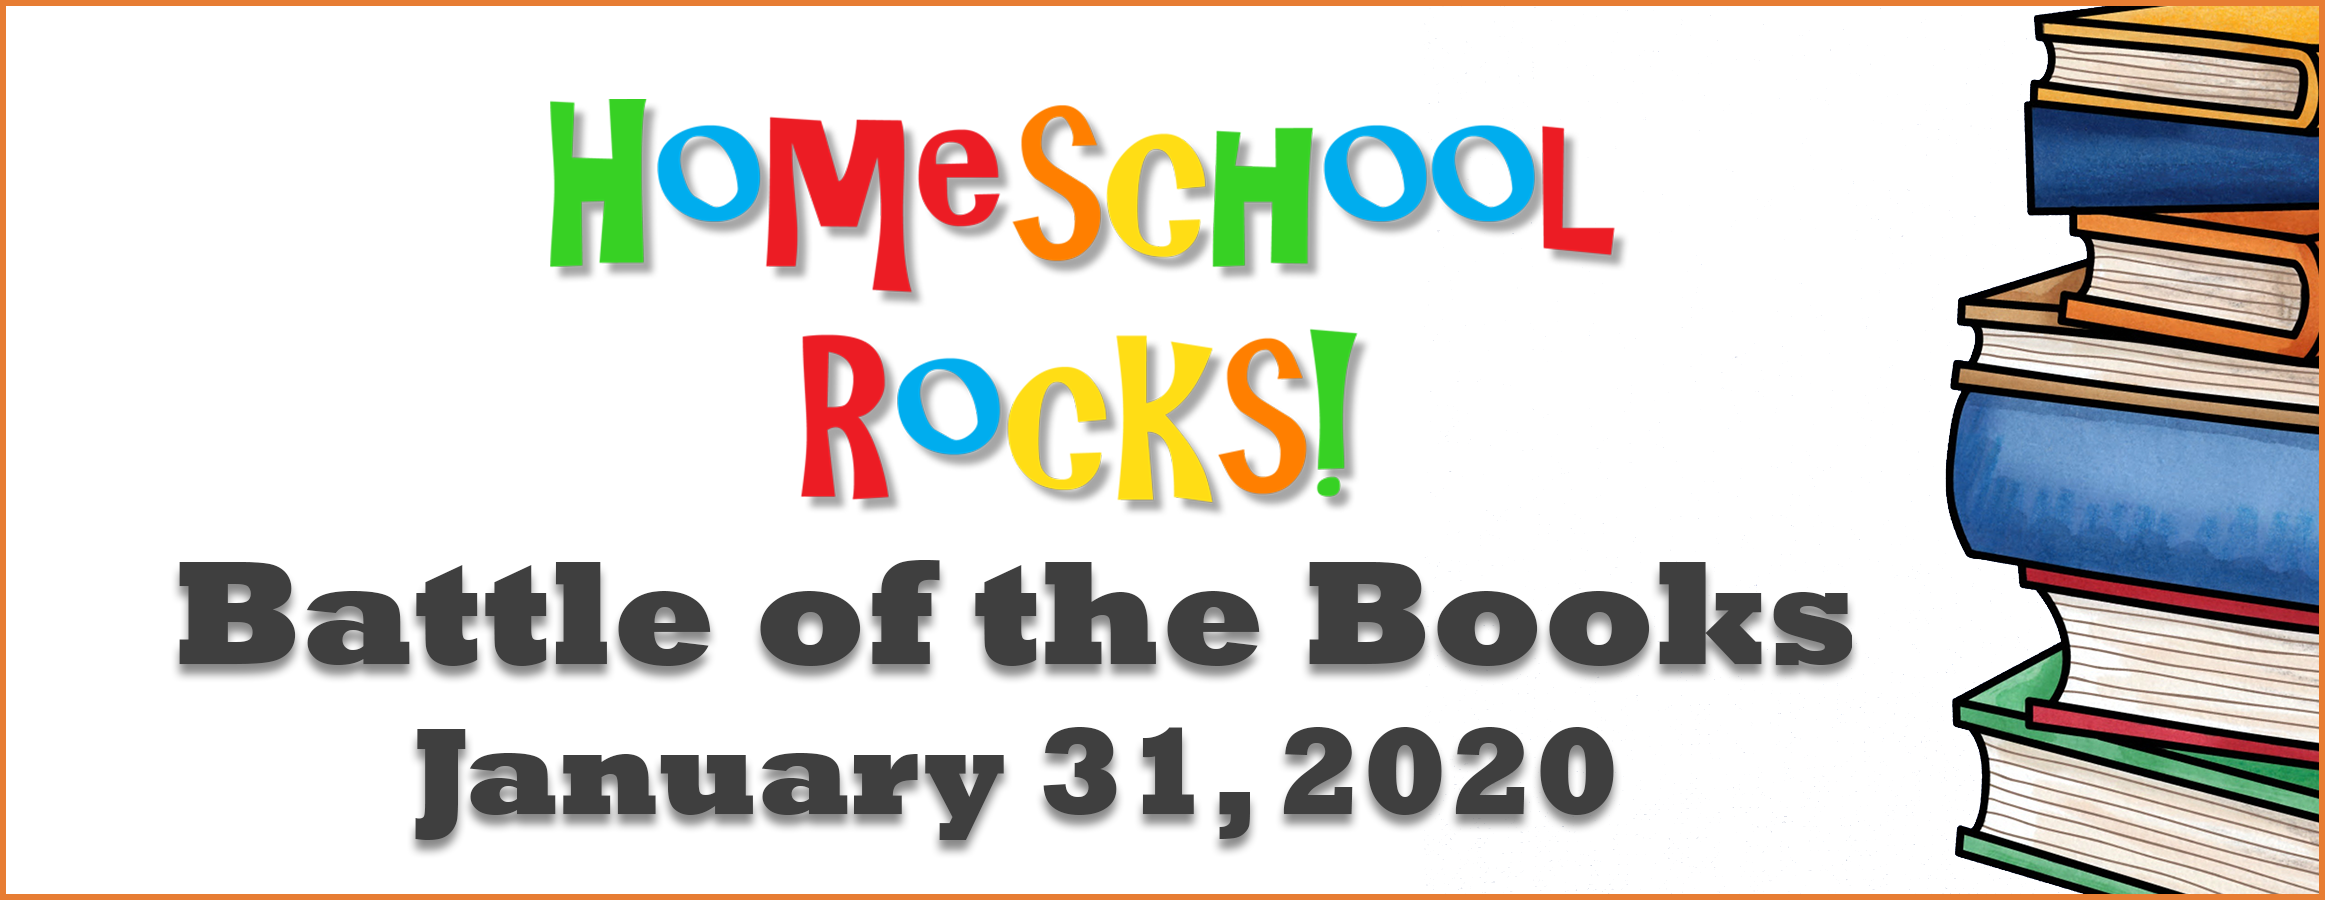 Homeschool Rocks! Battle of the Books